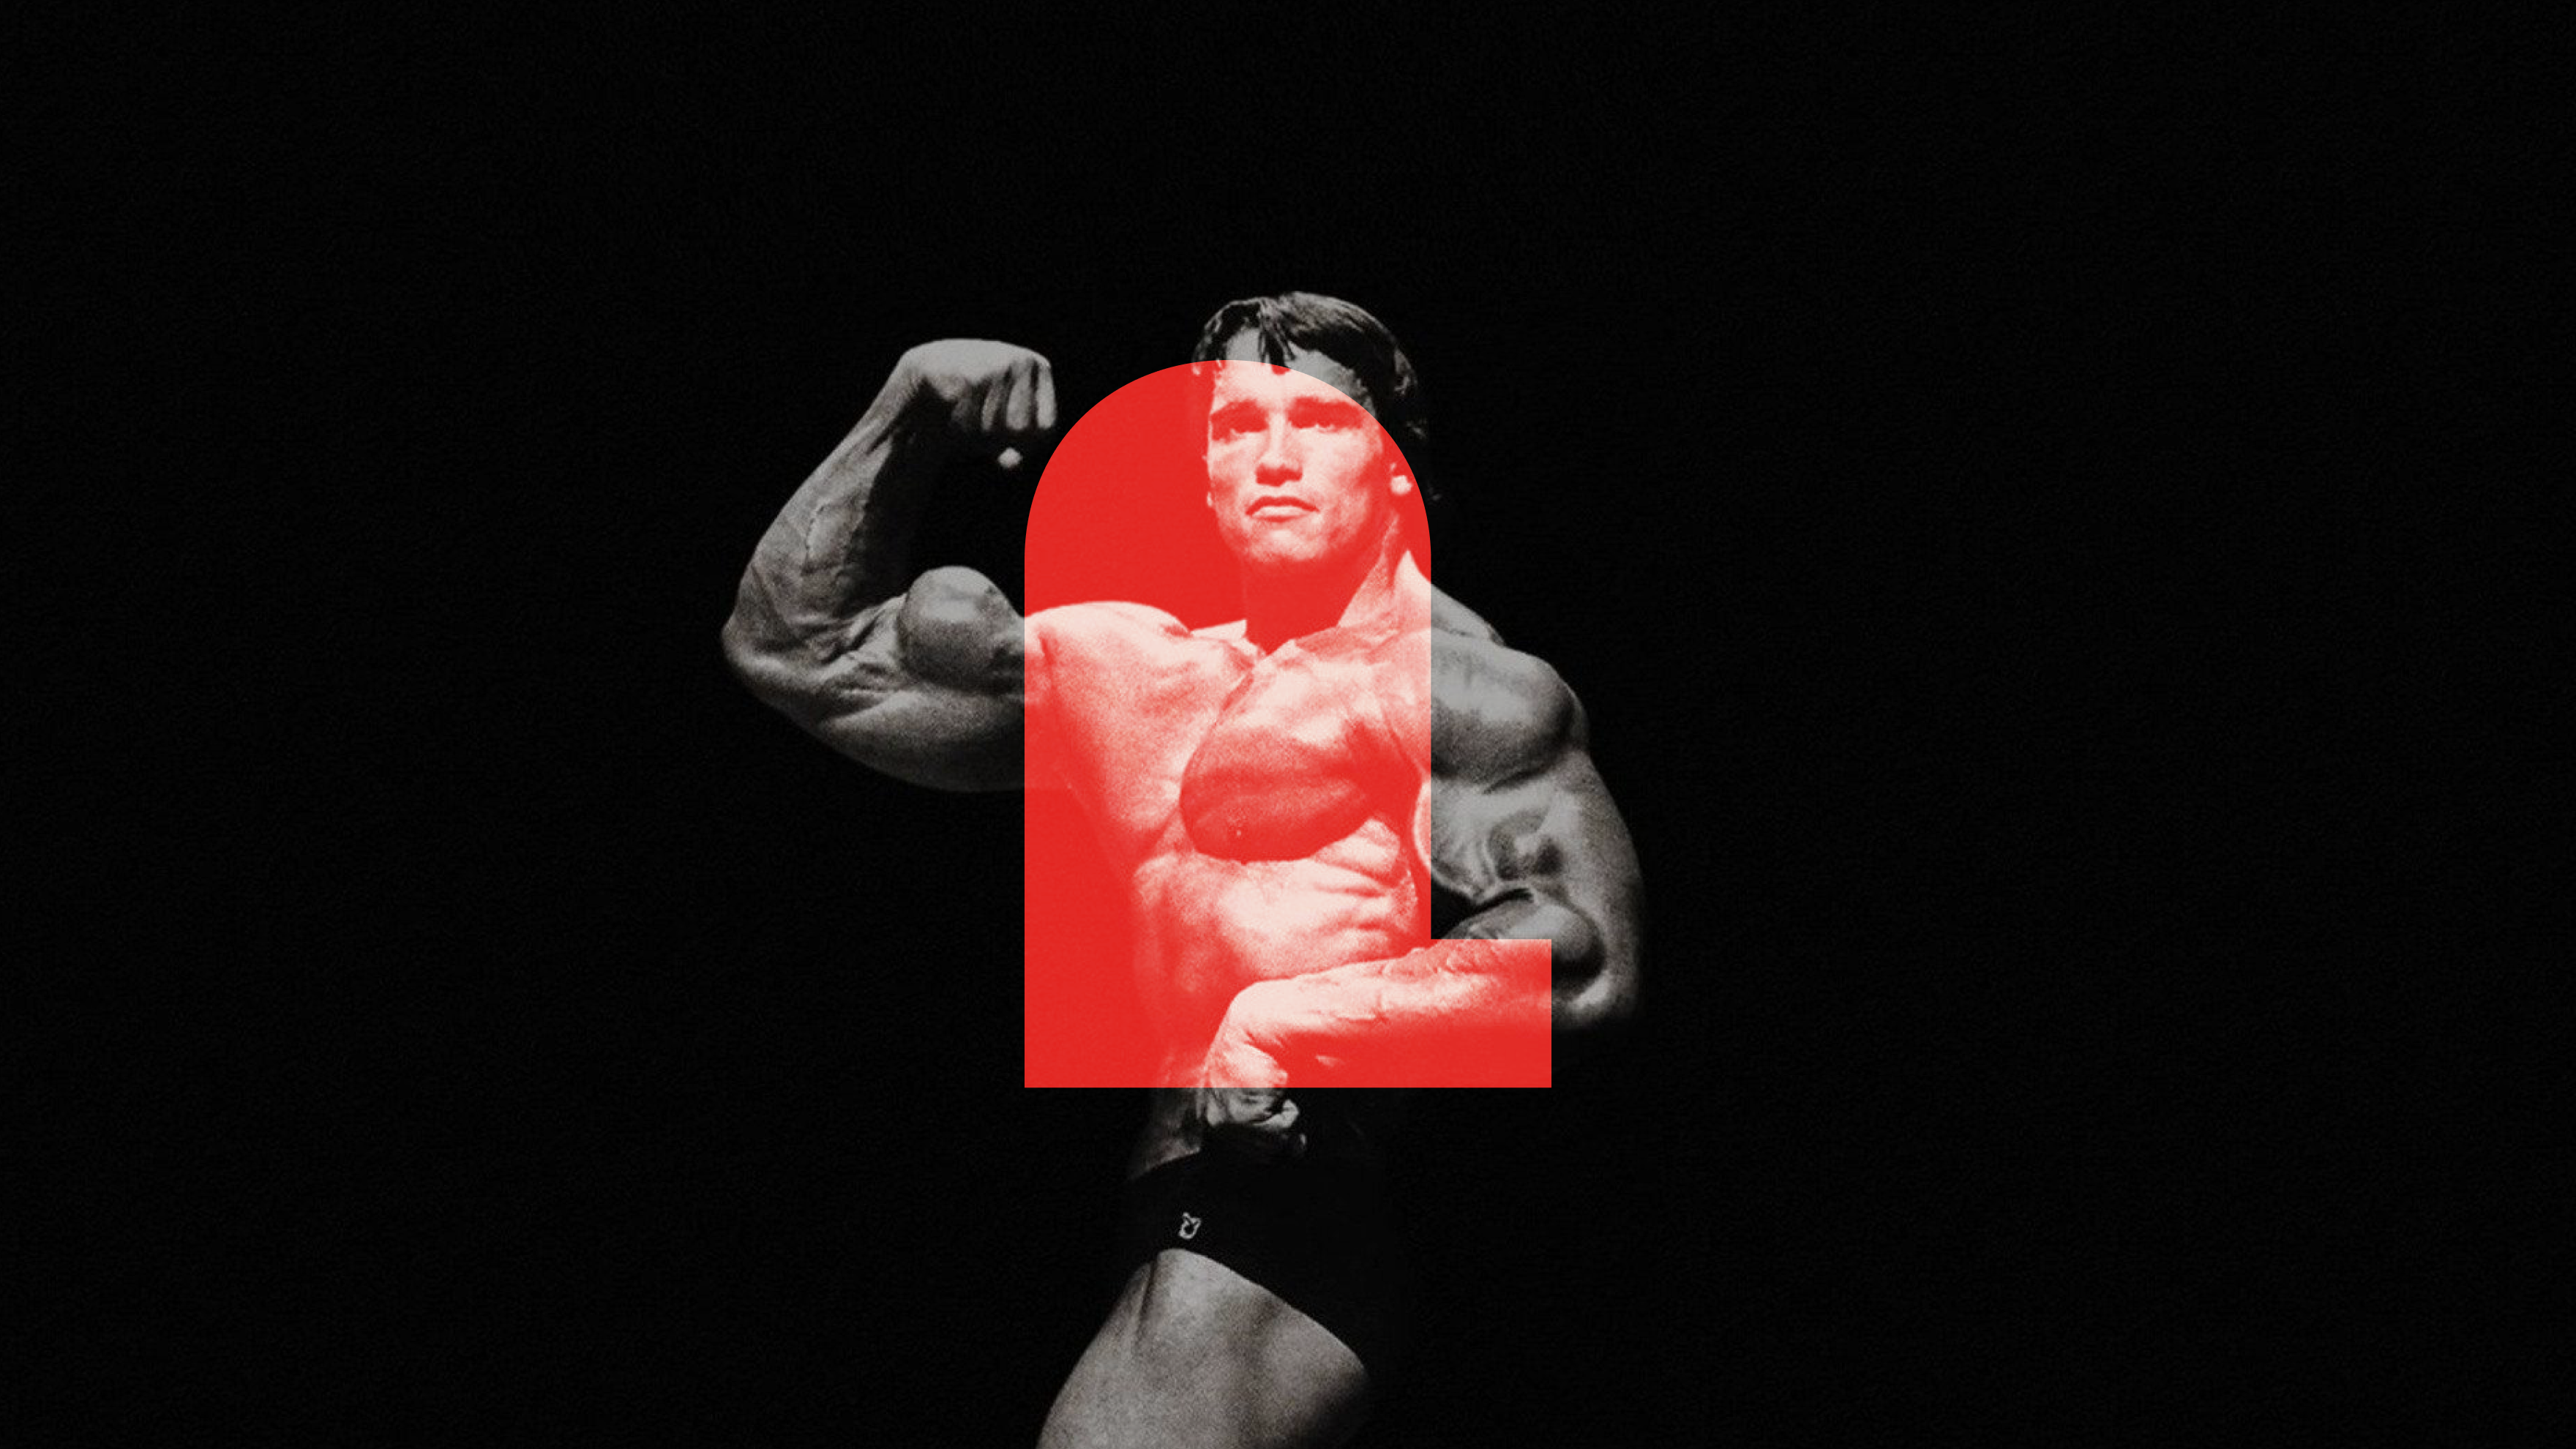 Wallpaper Arnold Schwarzenegger Actor Bodybuilding Muscle Arm  Background  Download Free Image